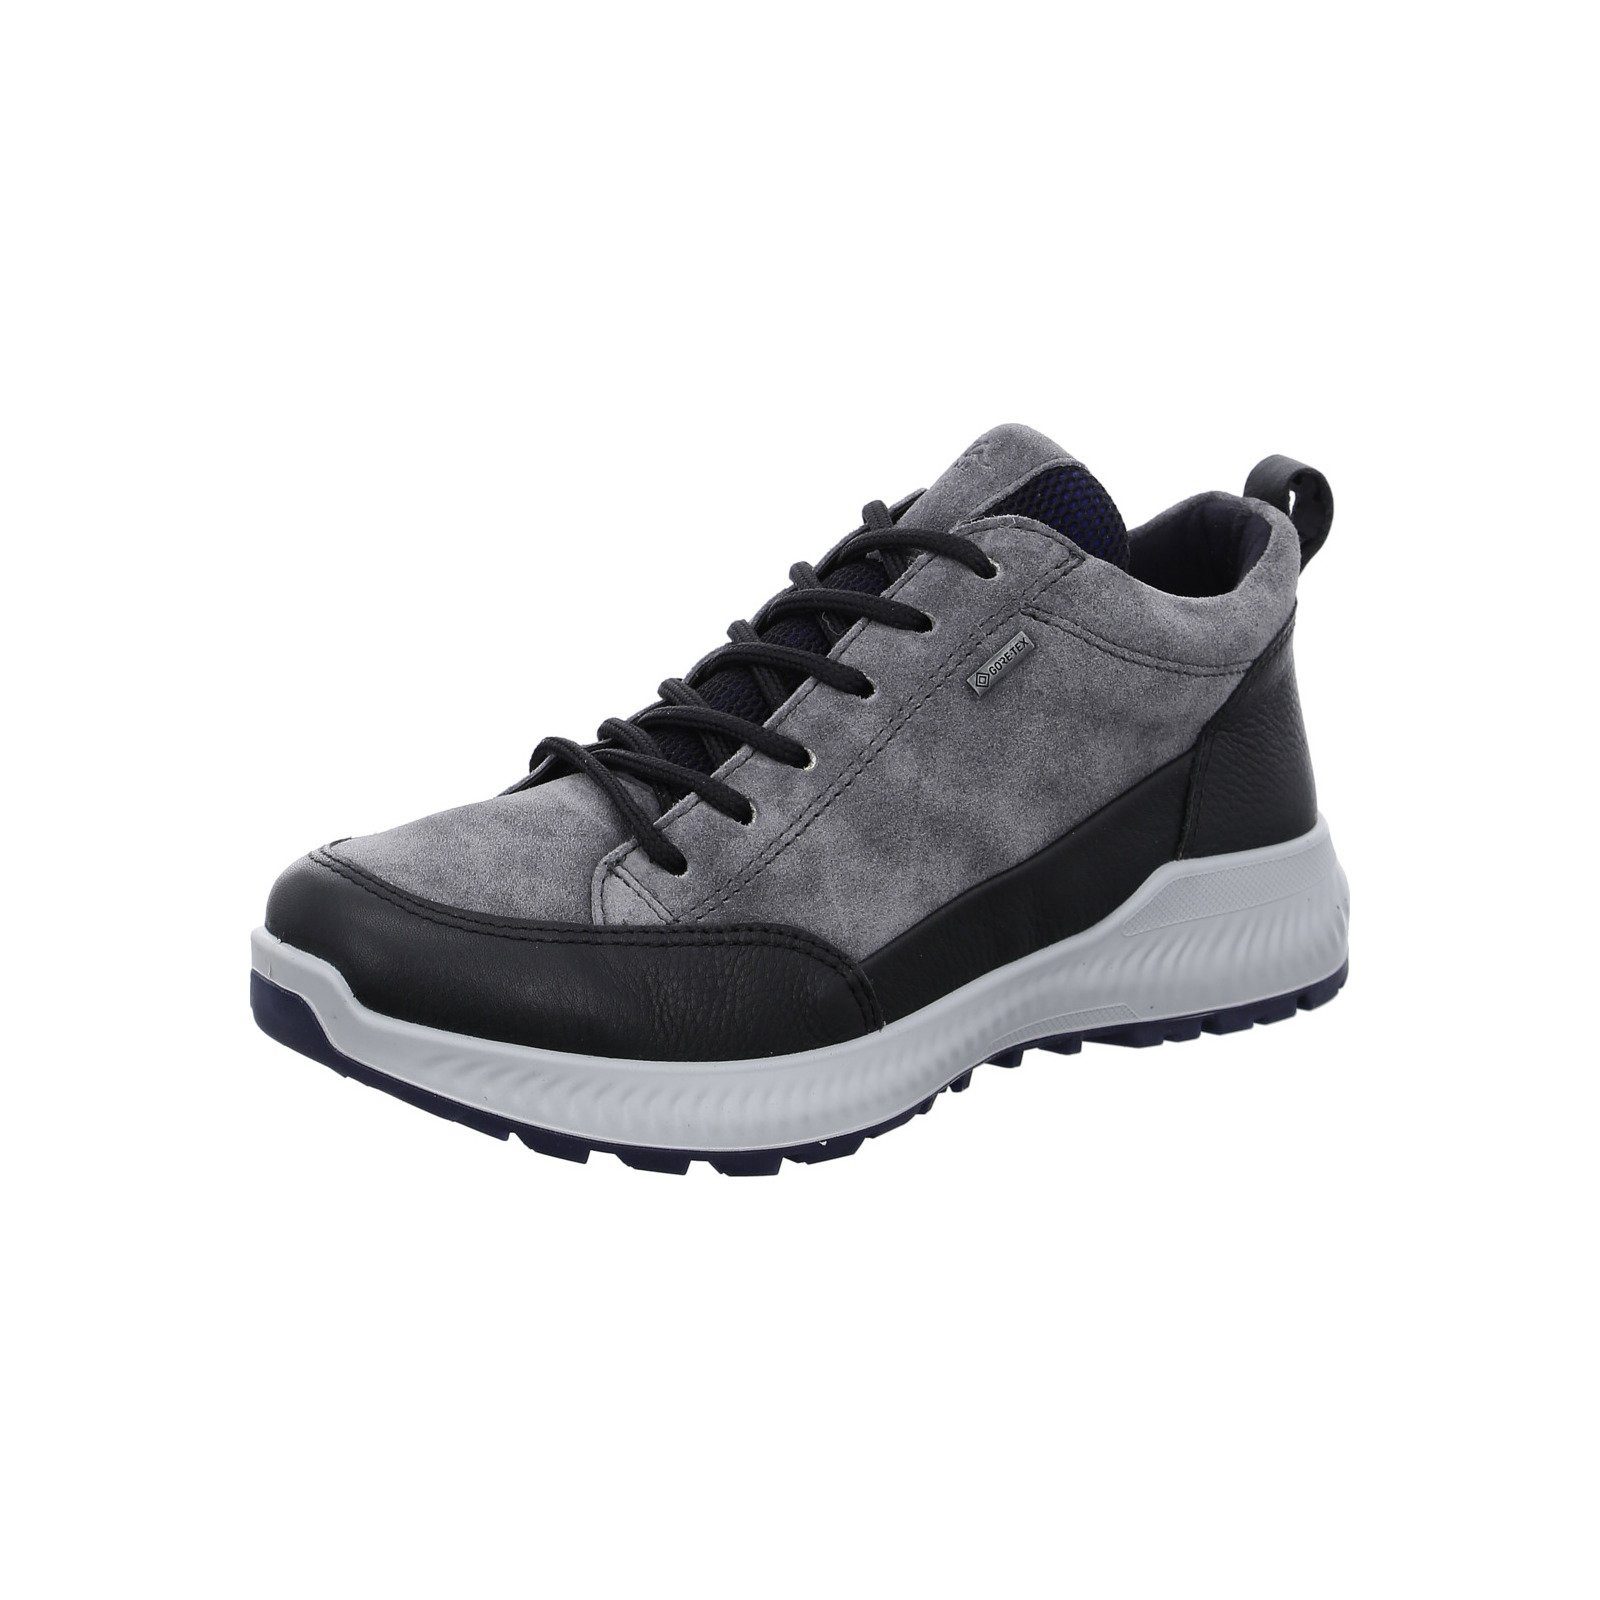 Ara Hiker - Damen Schuhe Schnürschuh Stiefeletten Leder grau